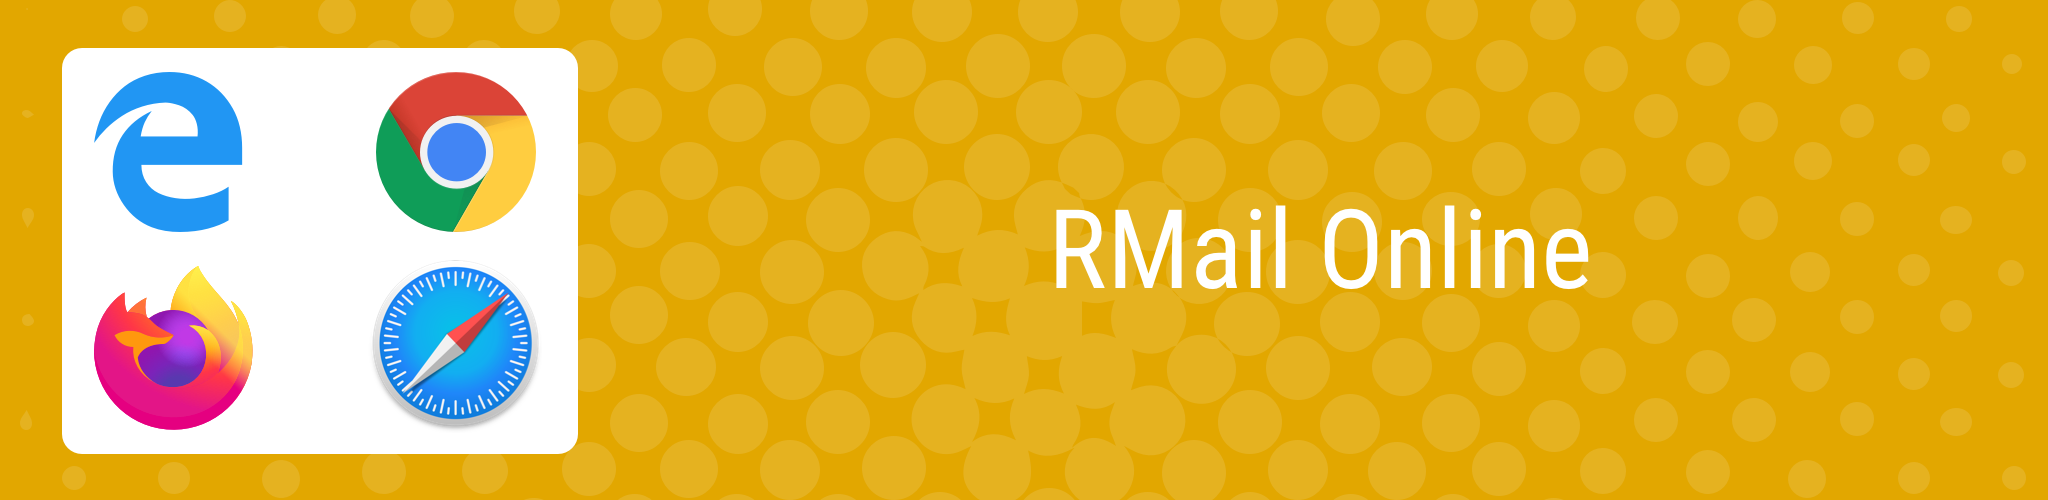 RMail Online Desktop & Mobile Browsers